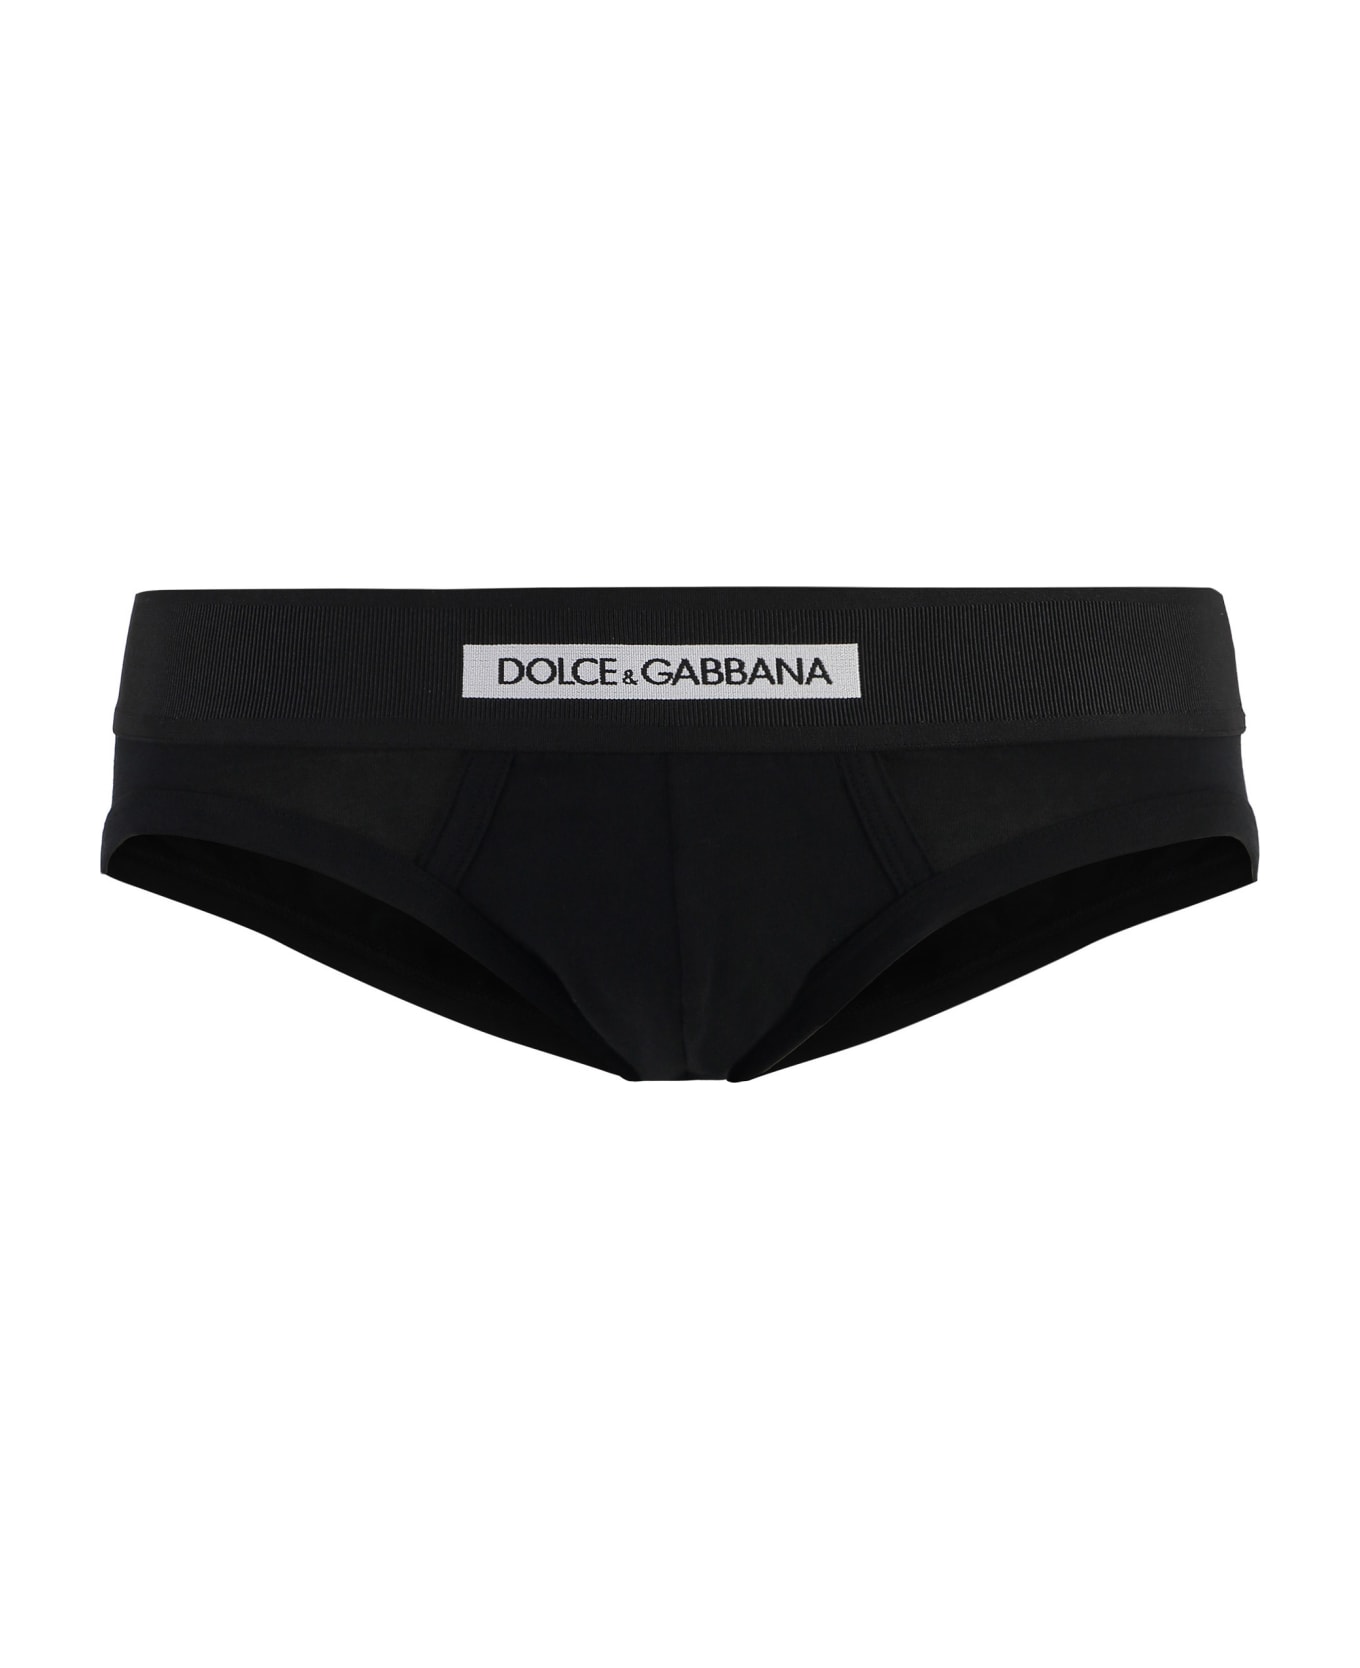 Dolce & Gabbana Cotton Briefs - black ショーツ